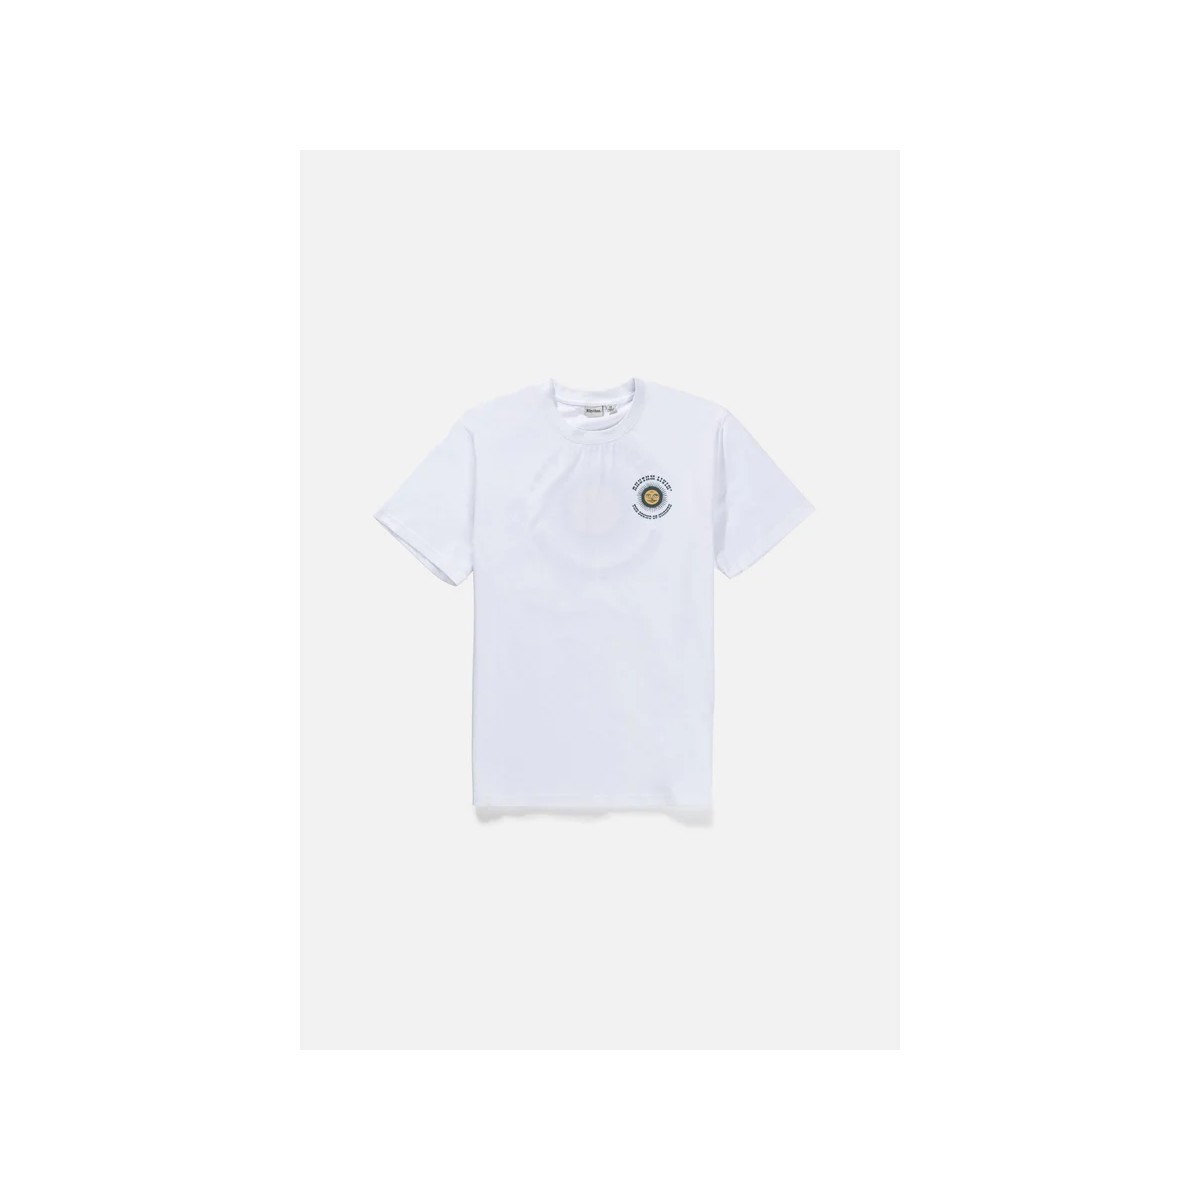 Rhythm - T-shirt blanc imprimé